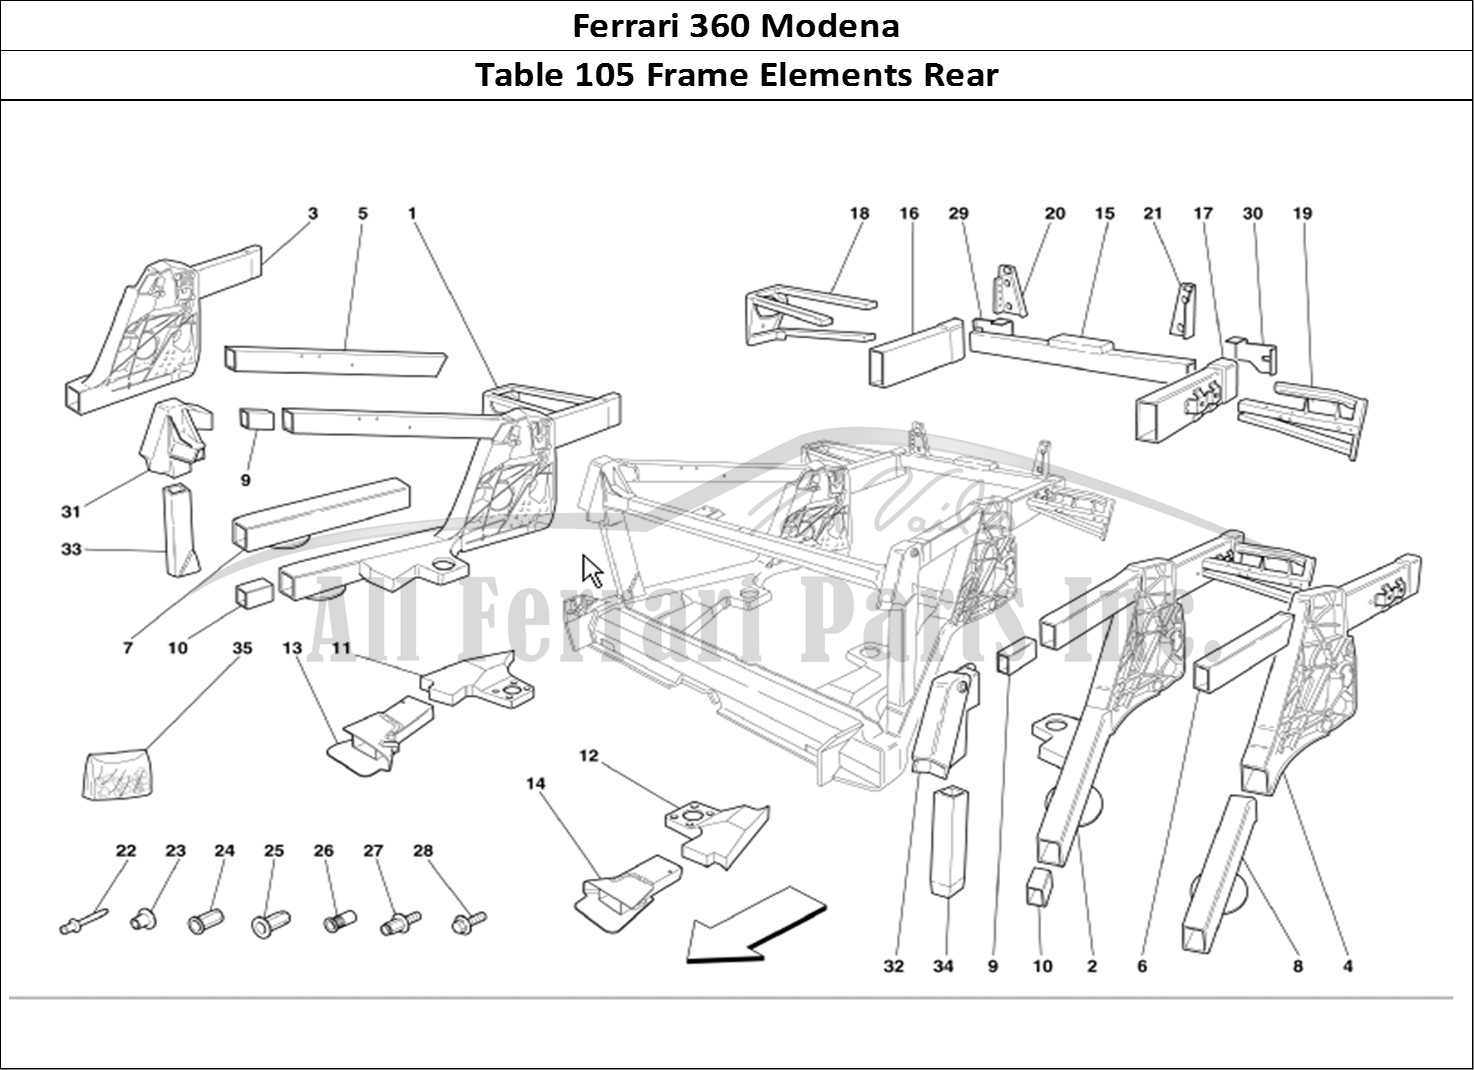 Ferrari Parts Ferrari 360 Modena Page 105 Frame Rear Elements Sub-G